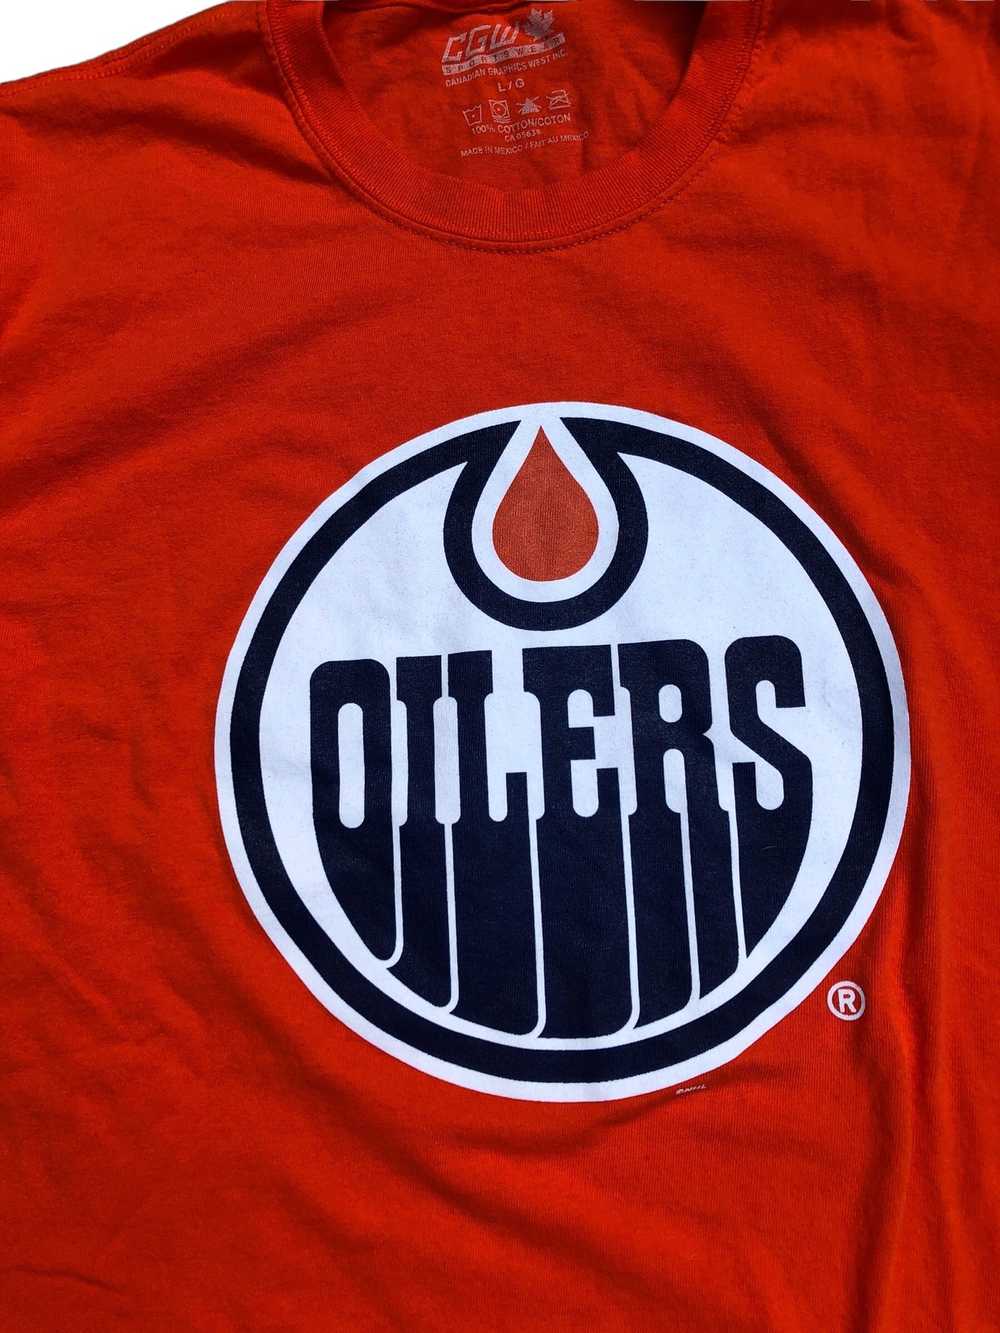 NHL Vintage CGW Edmonton Oilers Shirt Orange Large - image 5